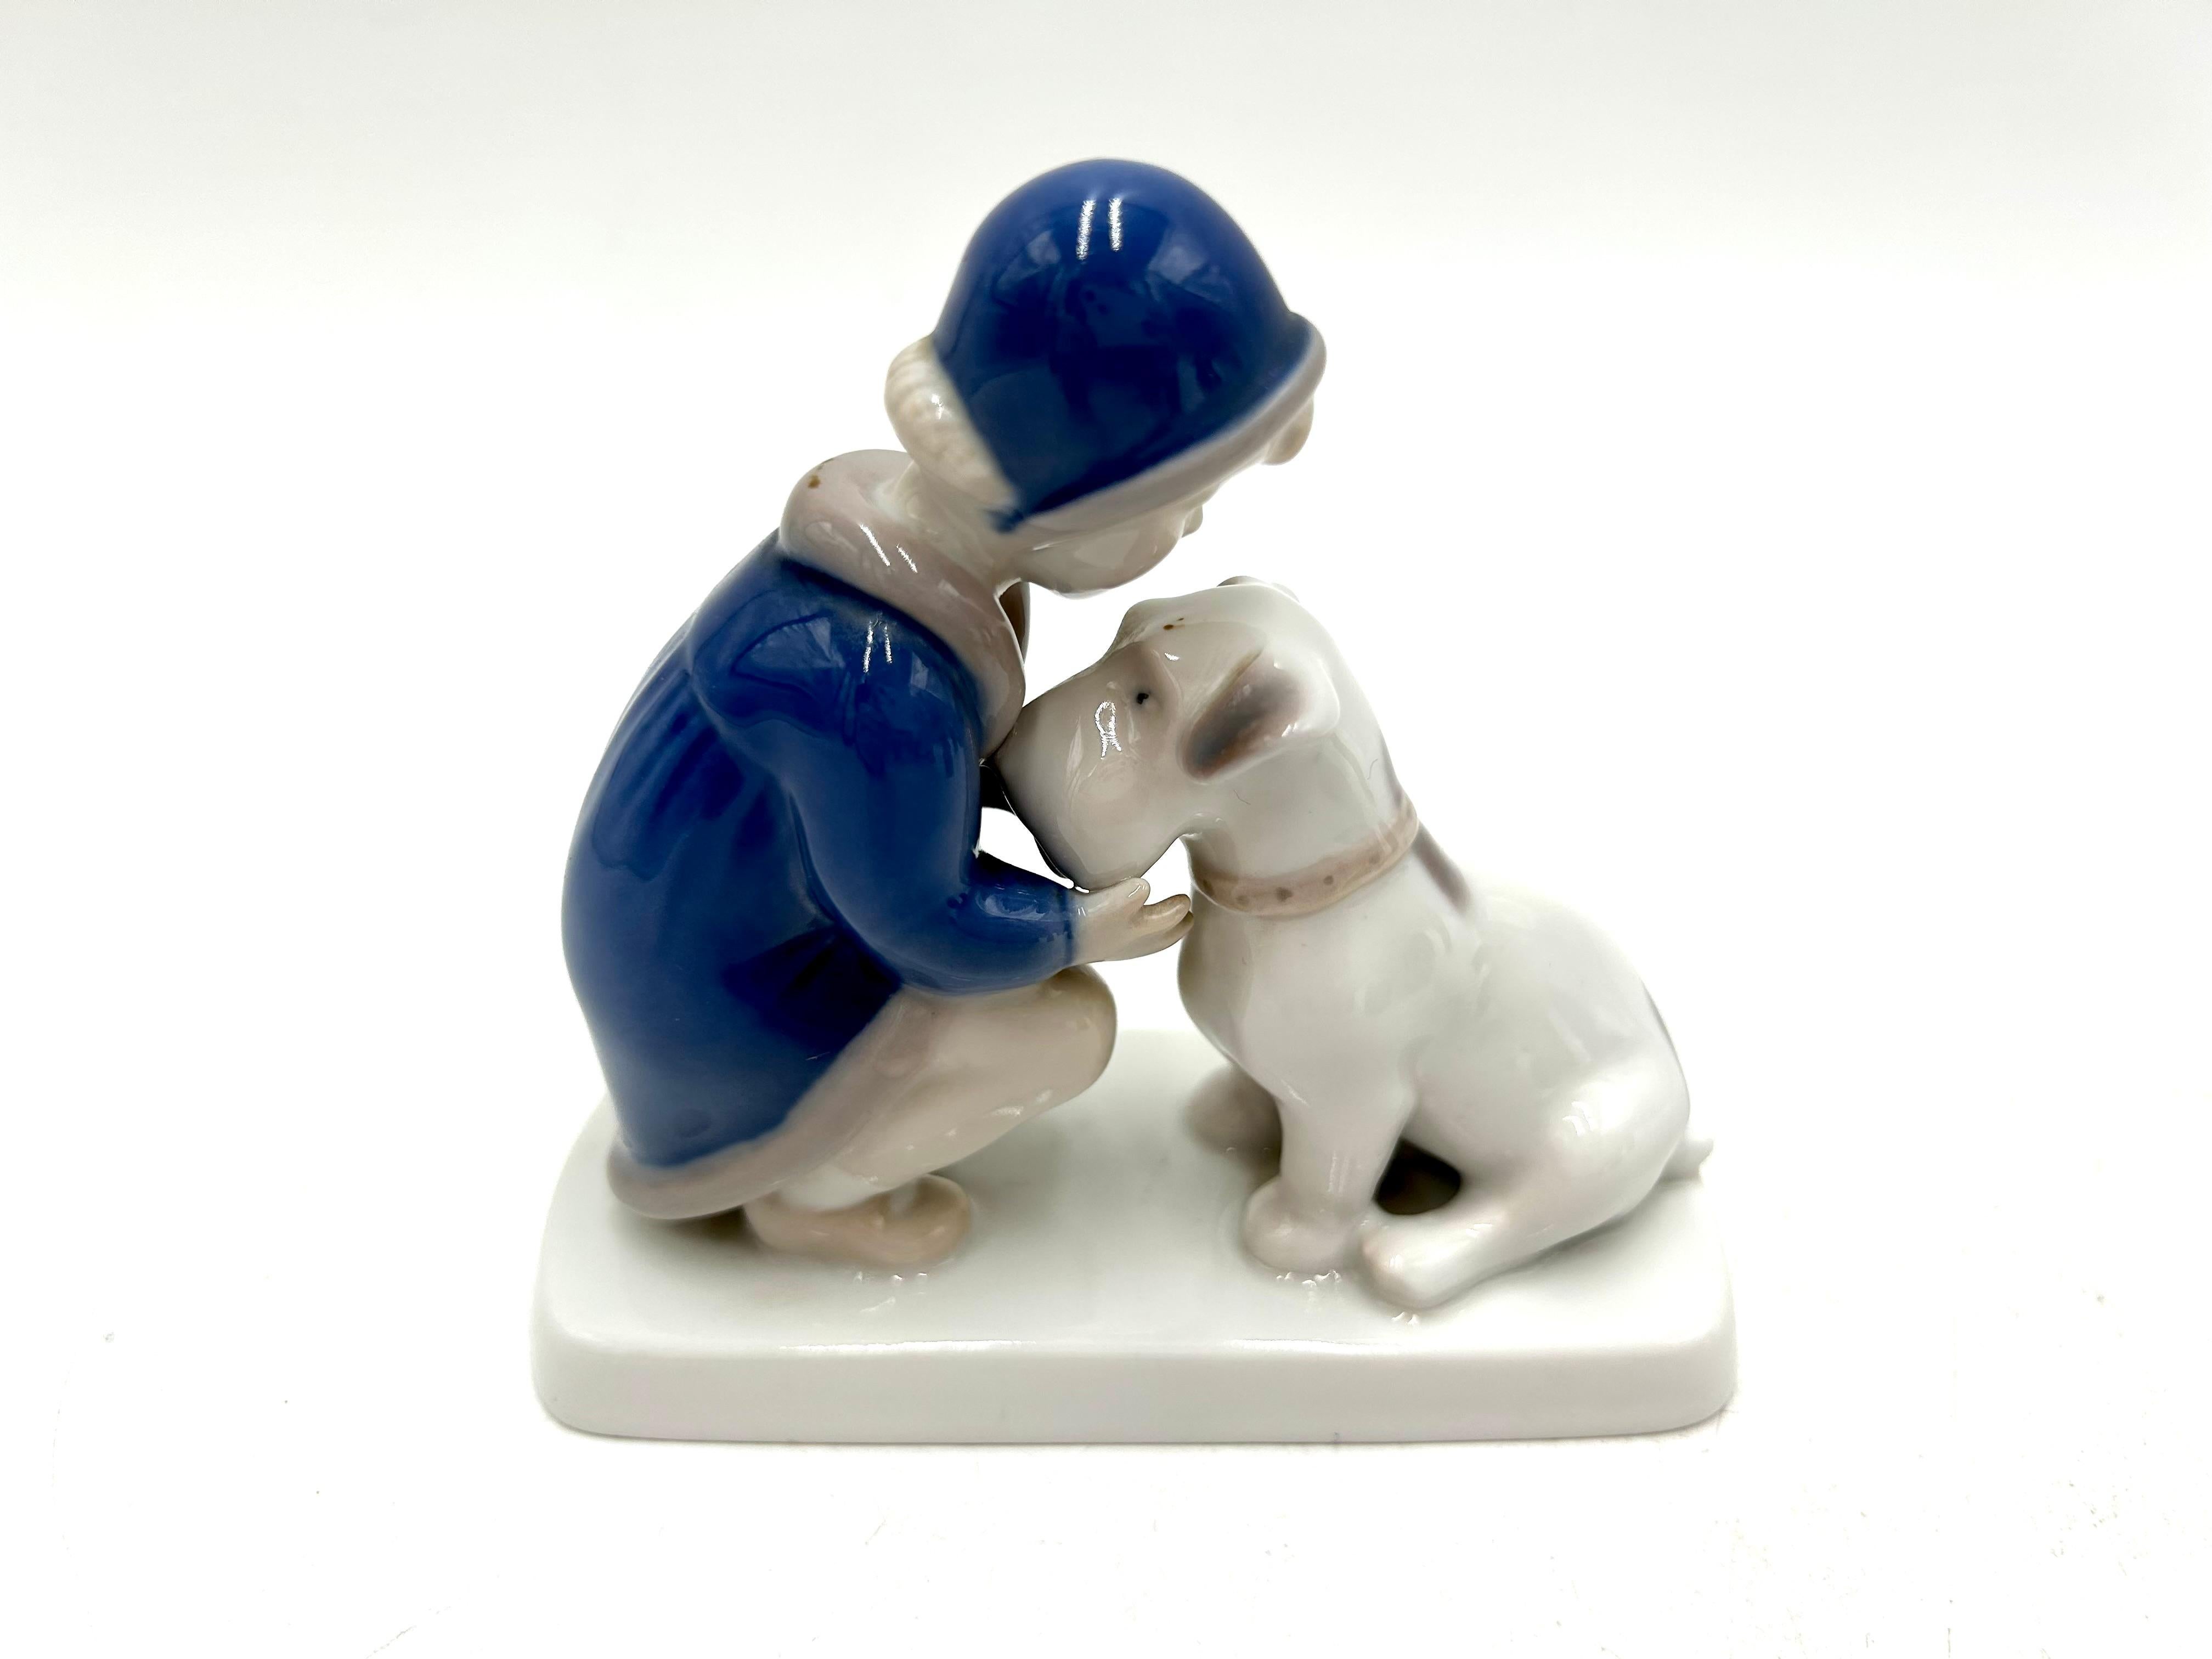 Danish Porcelain Figurine of a Girl with a Dog, Bing & Grondahl, Denmark, 1950s